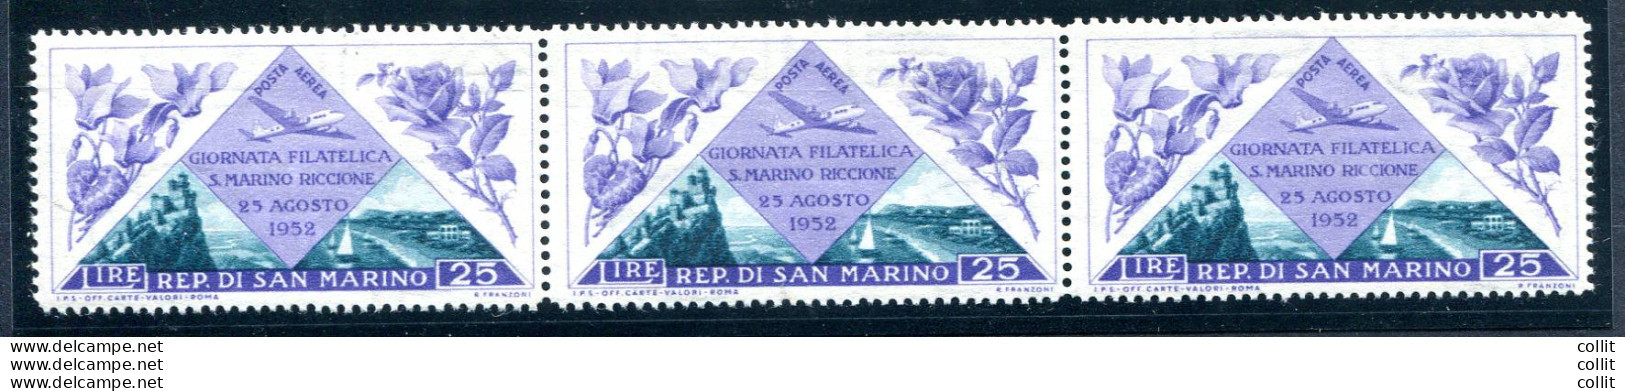 Posta Aerea "Giornata Filatelica" Lire 25 Varieta' Filigrana Lettere 9/10 - Unused Stamps